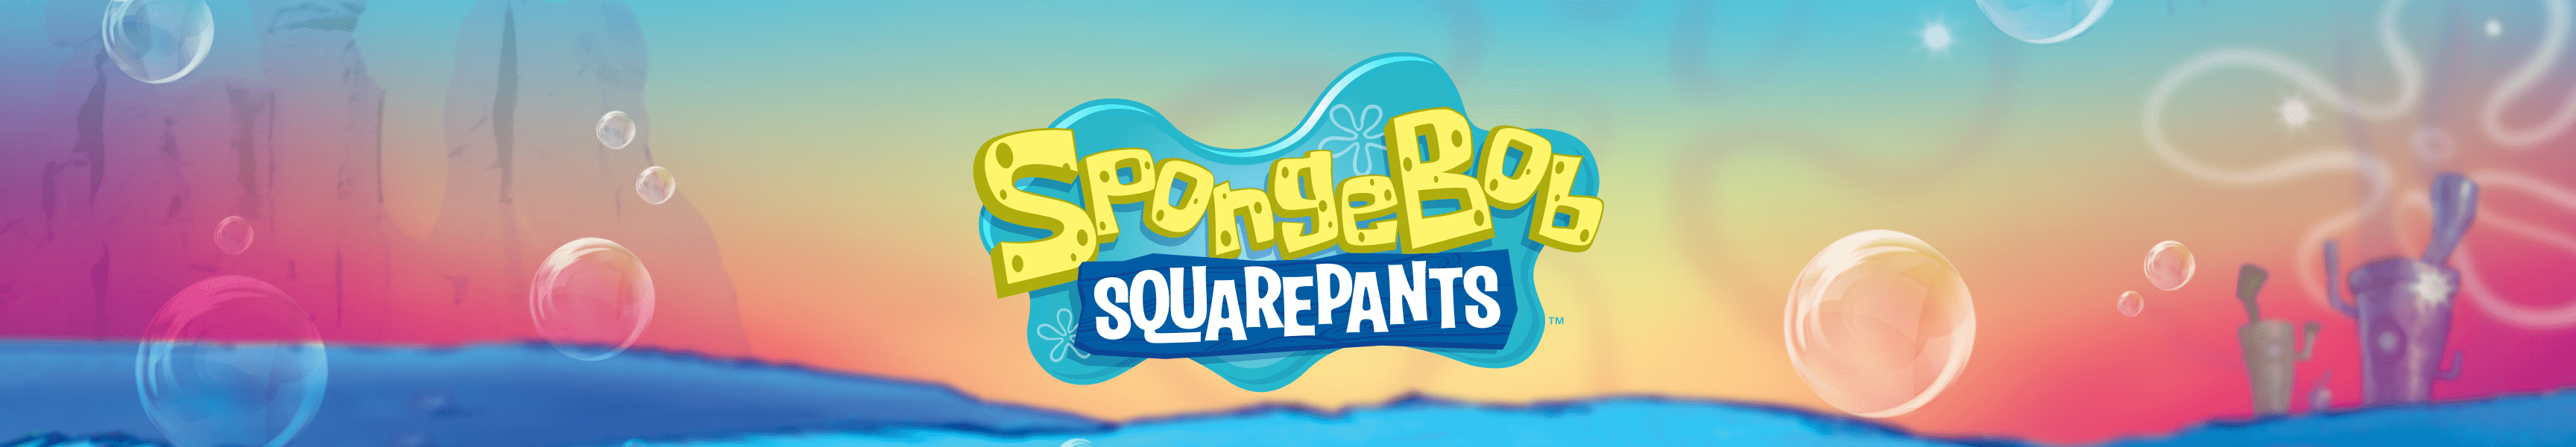 SpongeBob SquarePants Holiday Gift Guide